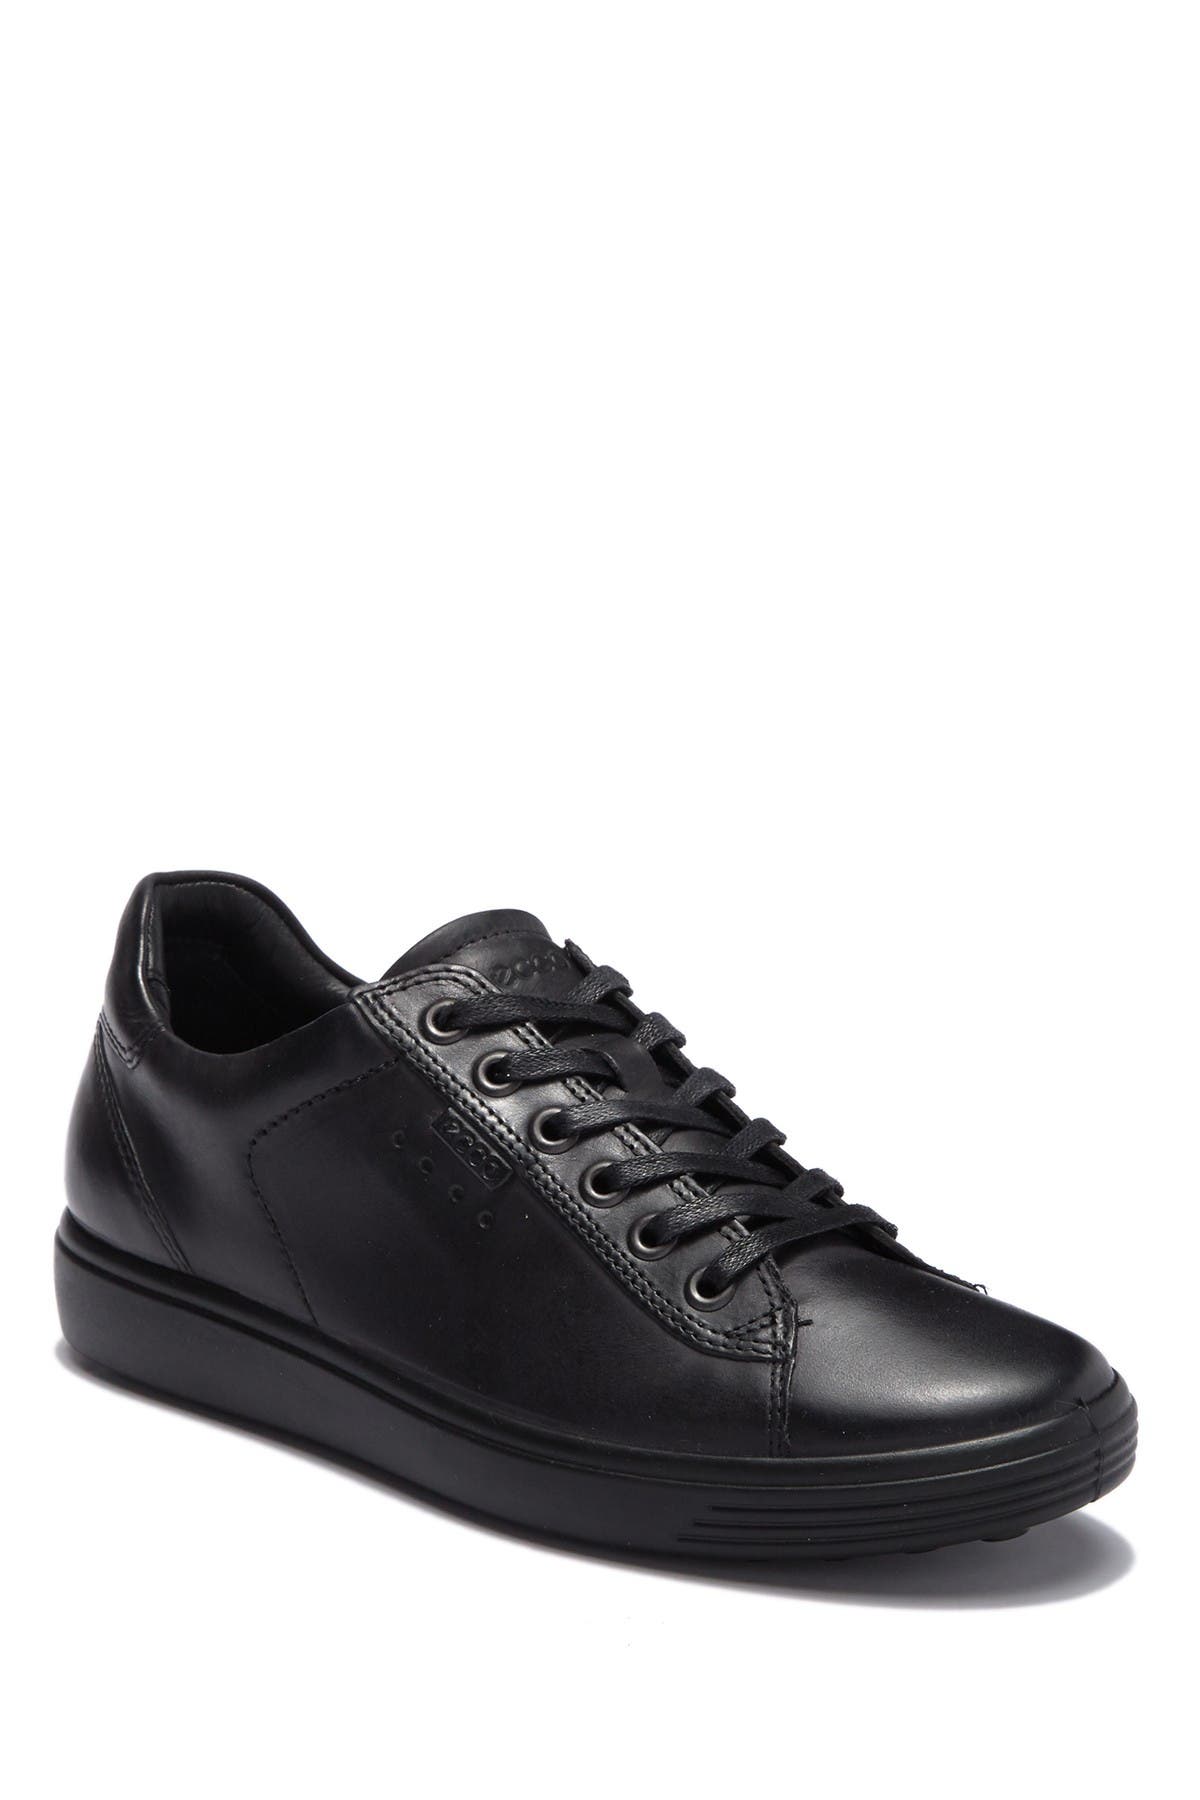 ECCO | Soft 7 Leather Sneaker 